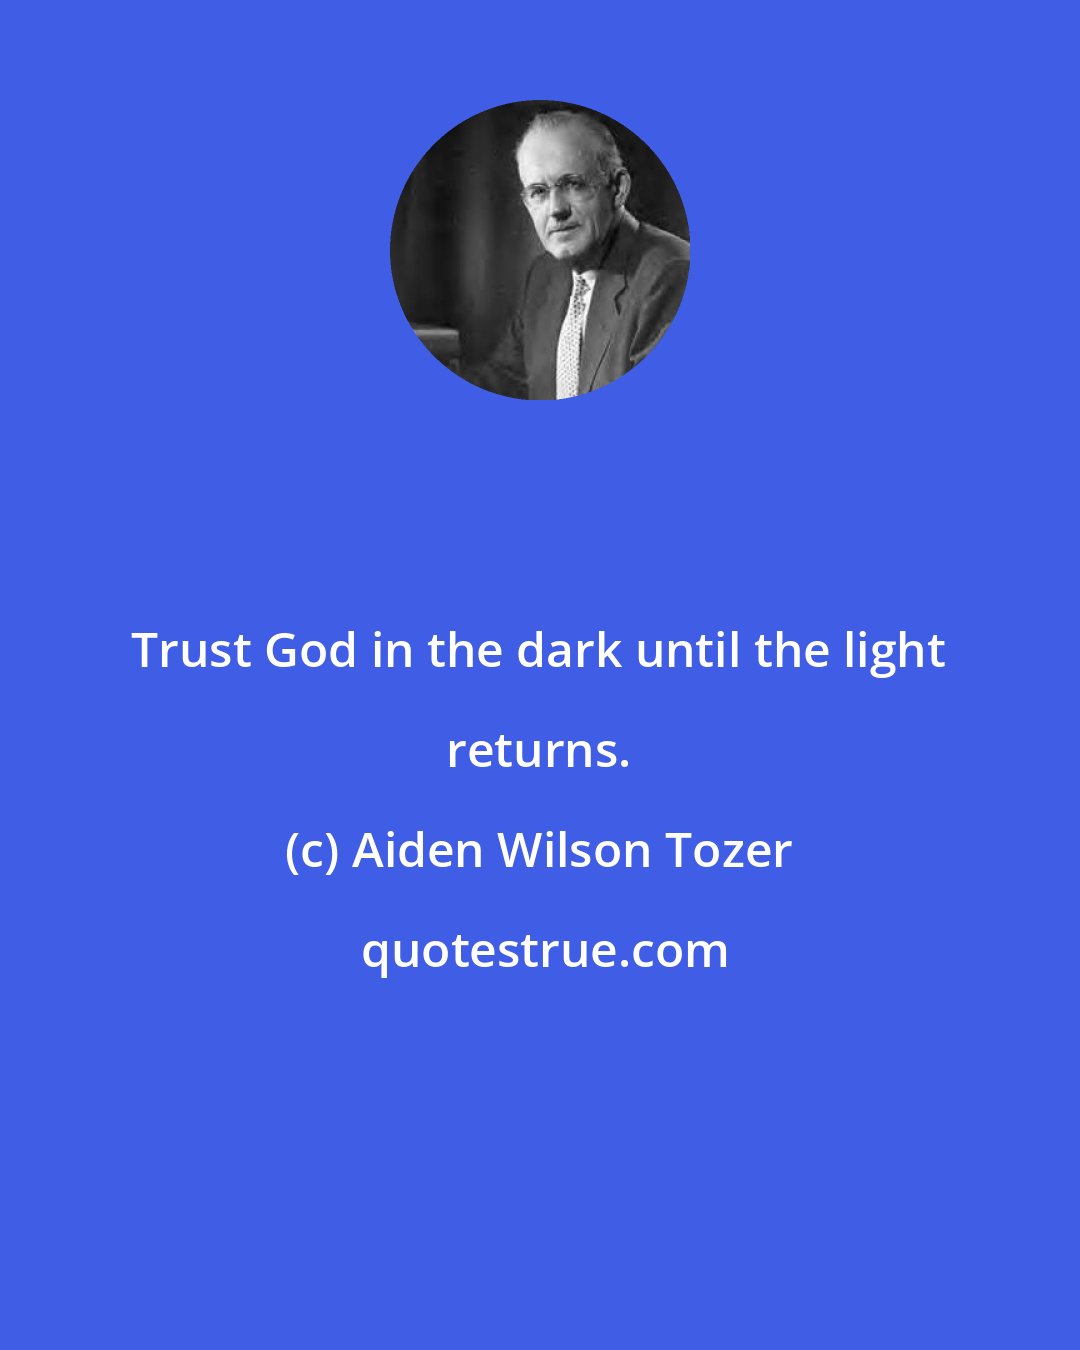 Aiden Wilson Tozer: Trust God in the dark until the light returns.